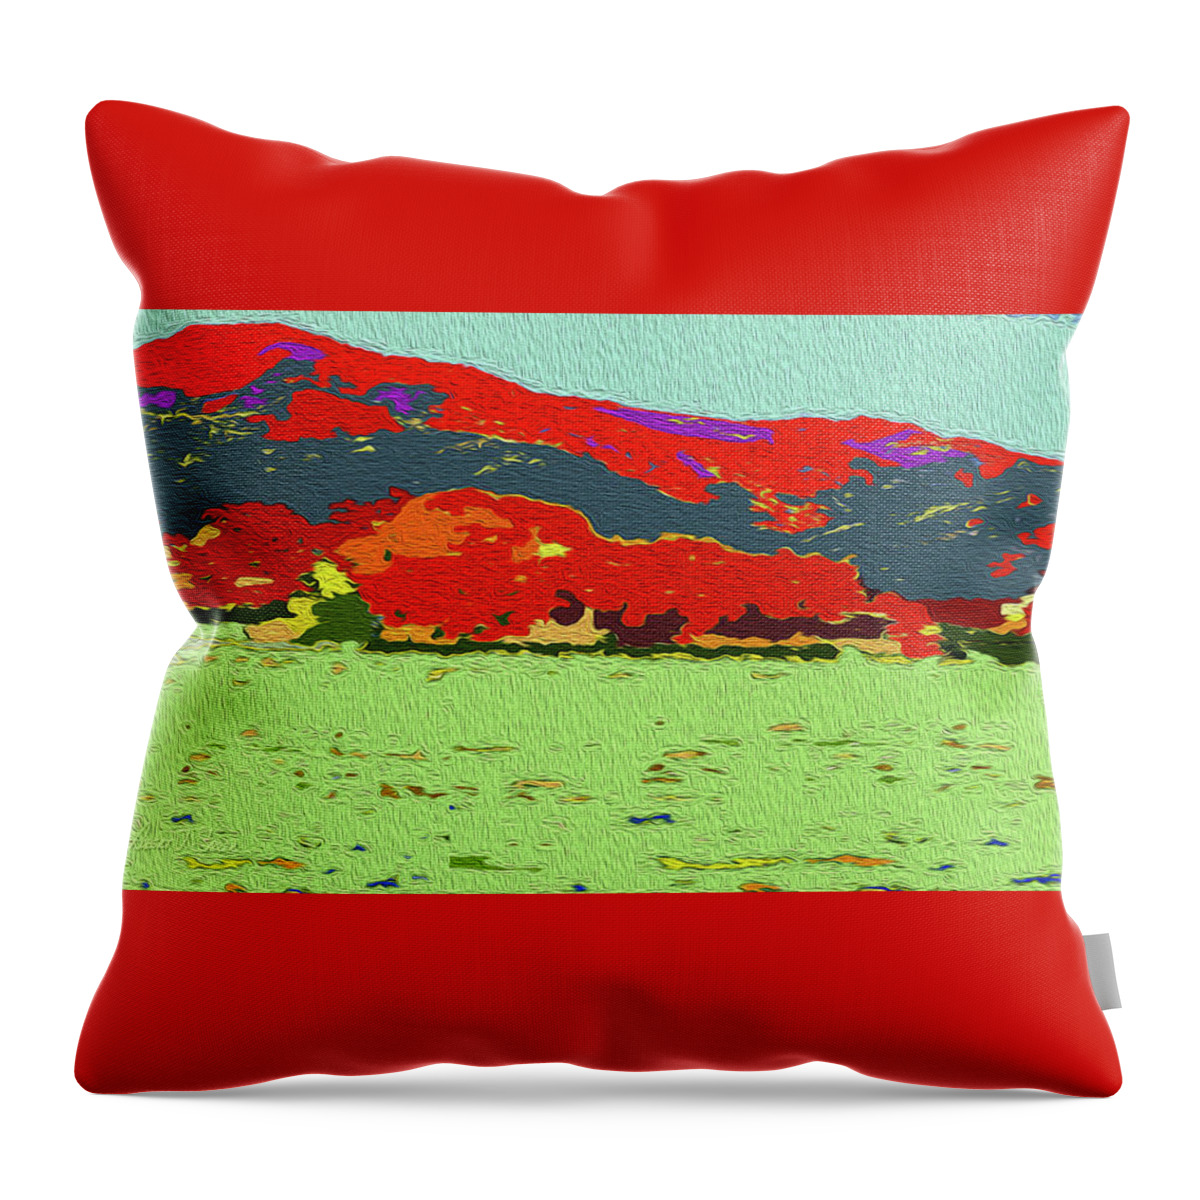  Throw Pillow featuring the mixed media Taos Landscape by Robert J Sadler